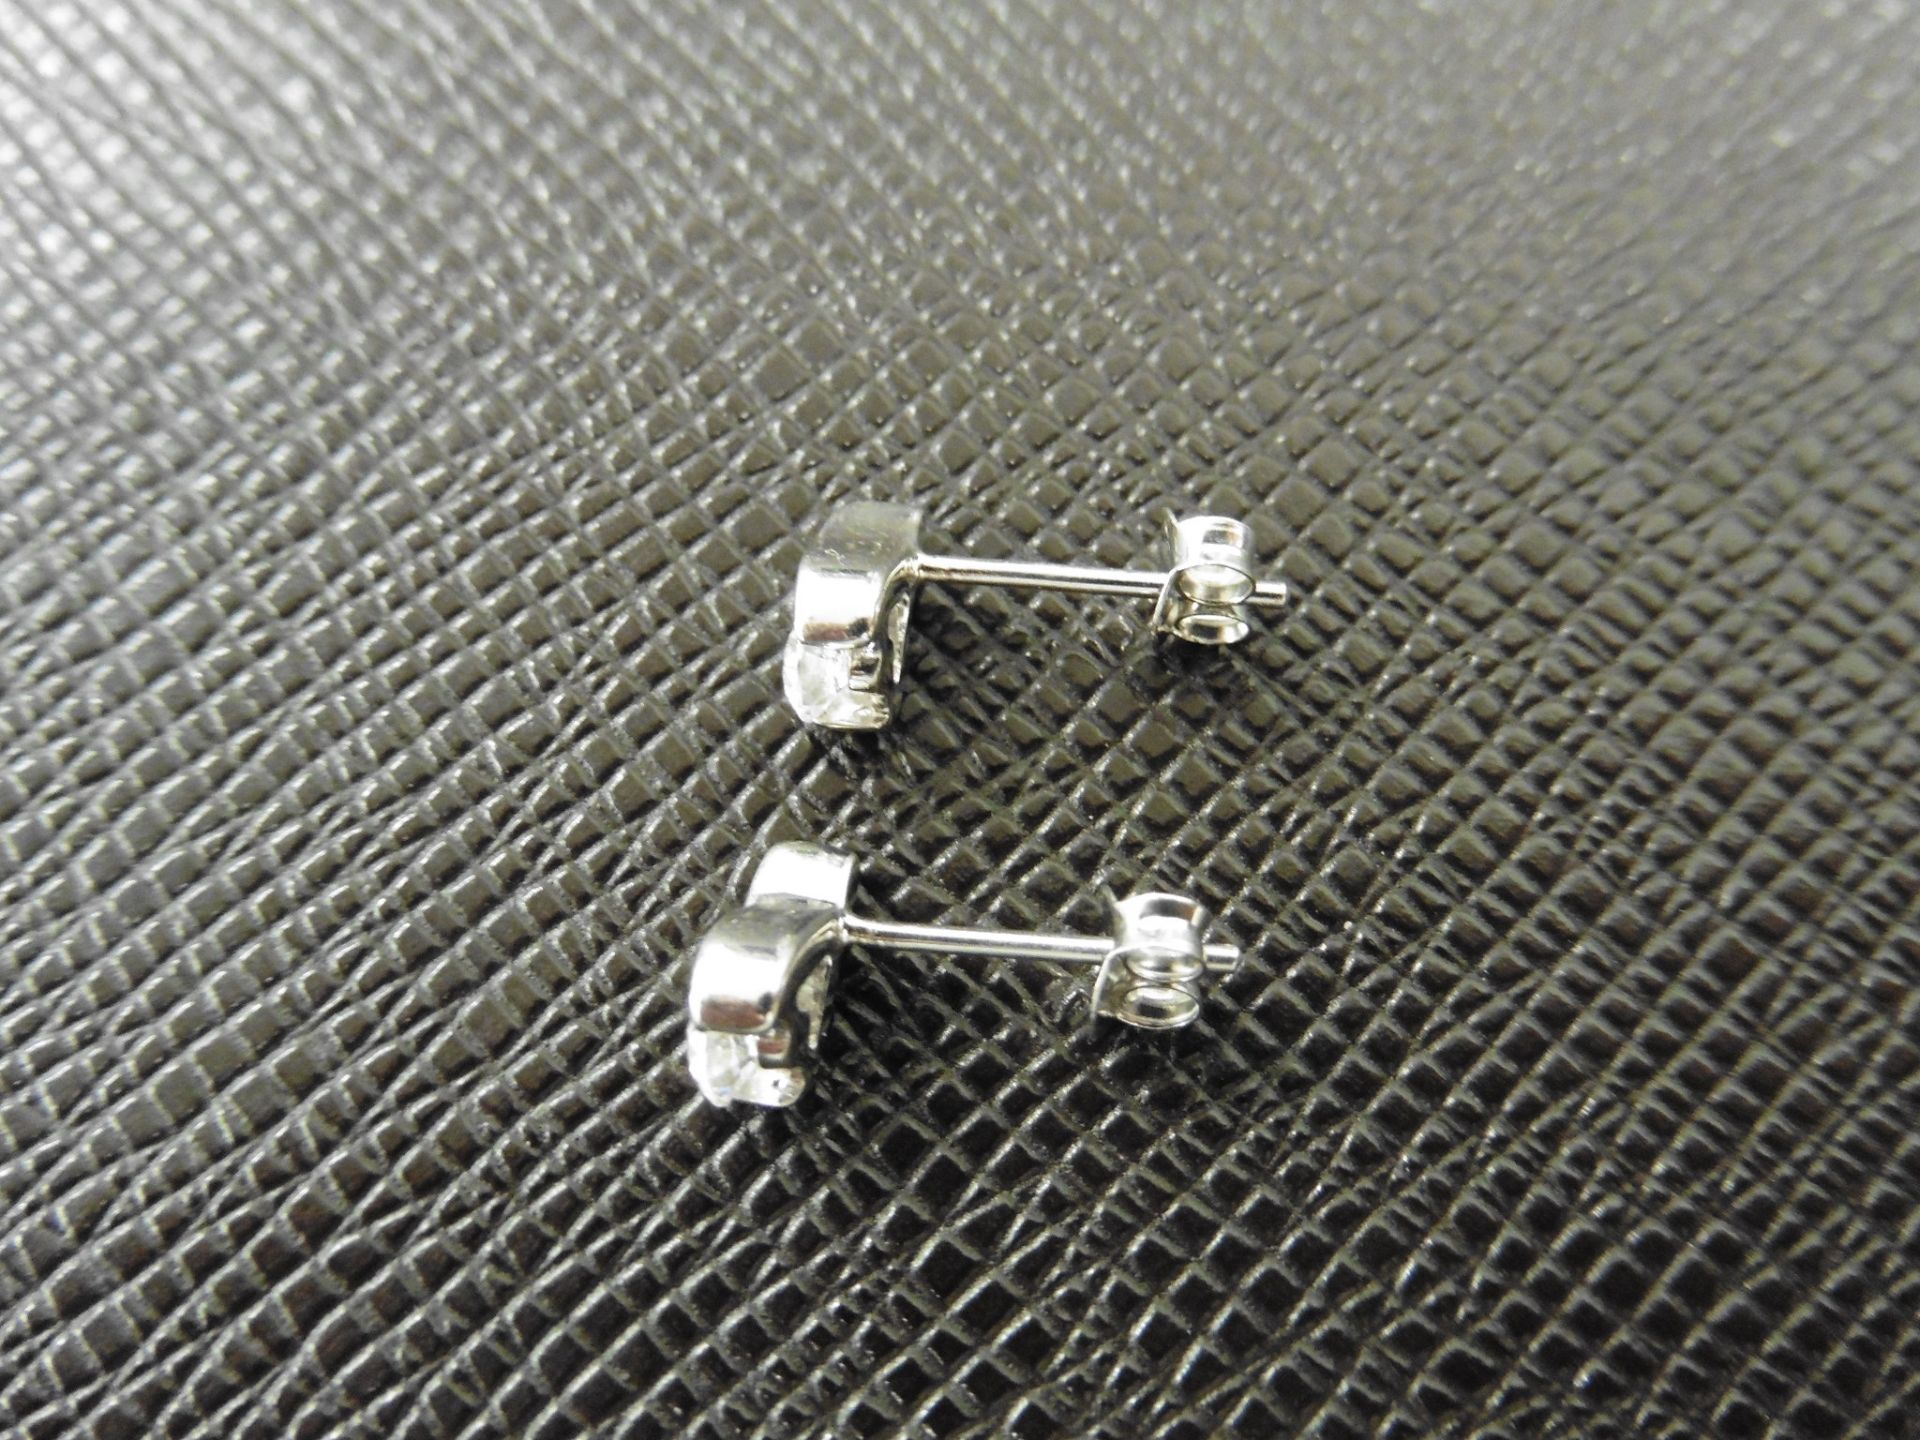 0.10ct diamond tear drop earrings set in platinum 950. 2 small brilliant cut diamonds, H colourand - Image 3 of 3